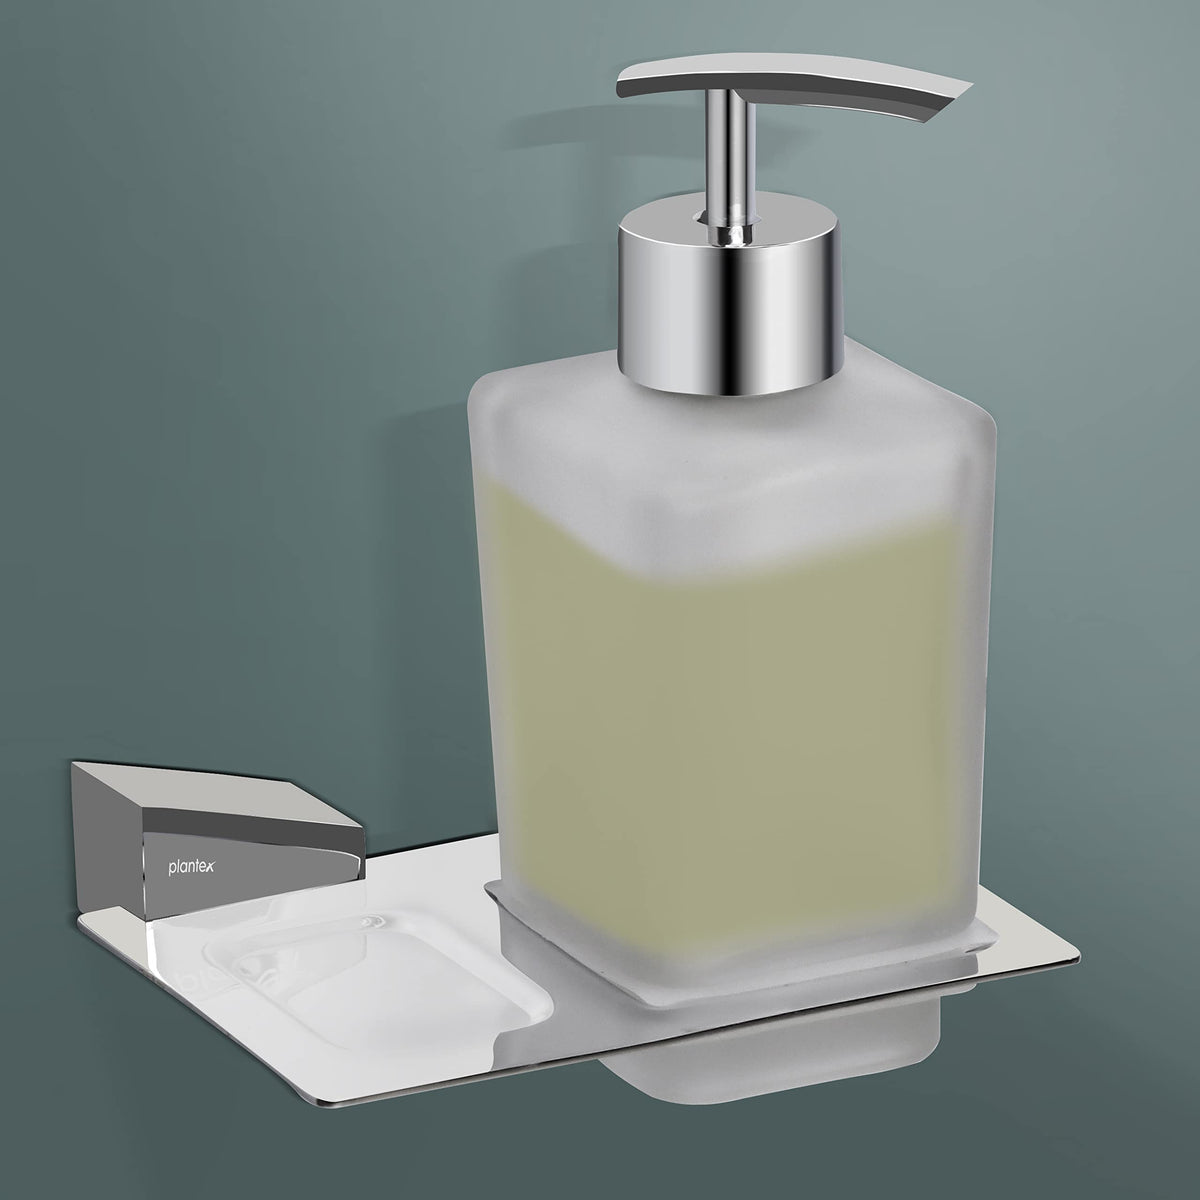 Plantex Fully Brass Smero Liquid Soap Dispenser/Shampoo Dispenser/Hand Wash Dispenser/Bathroom Accessories - Chrome (AR-3136)